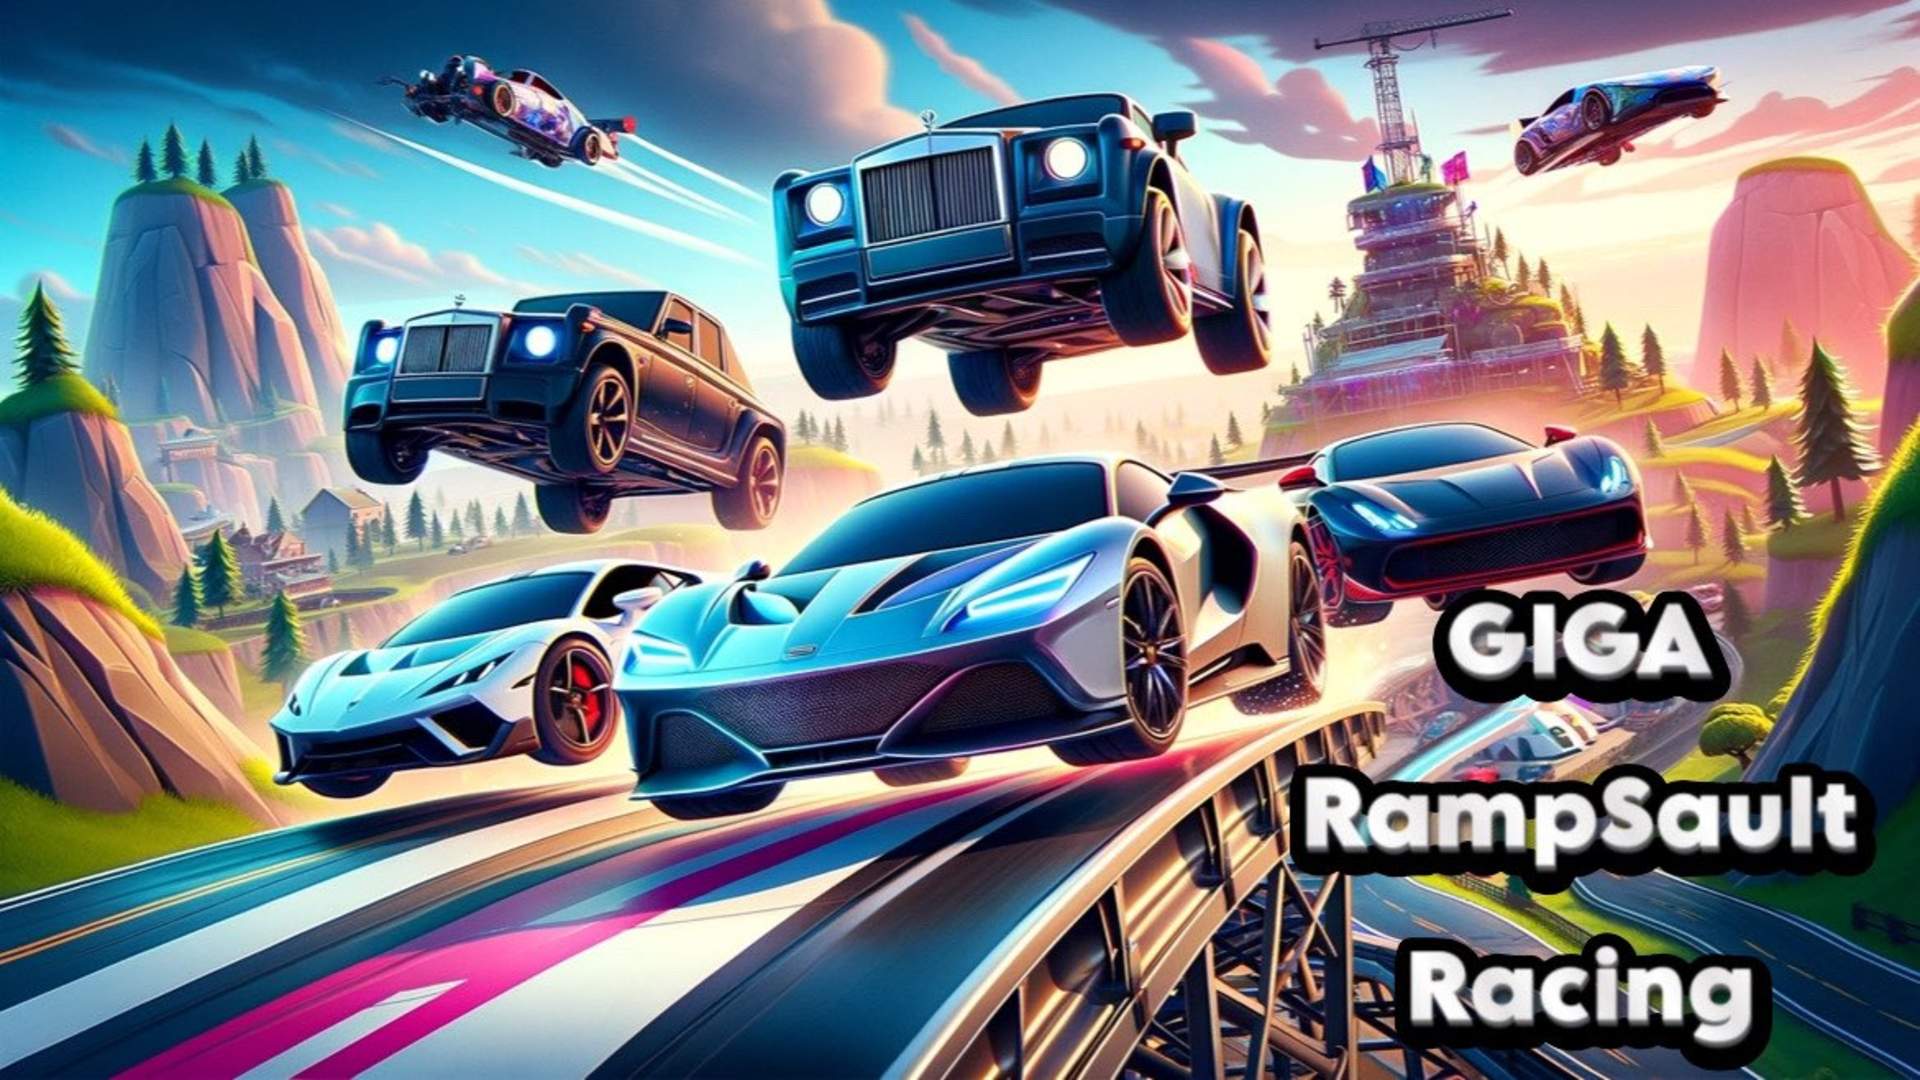 Giga RampSault Racing